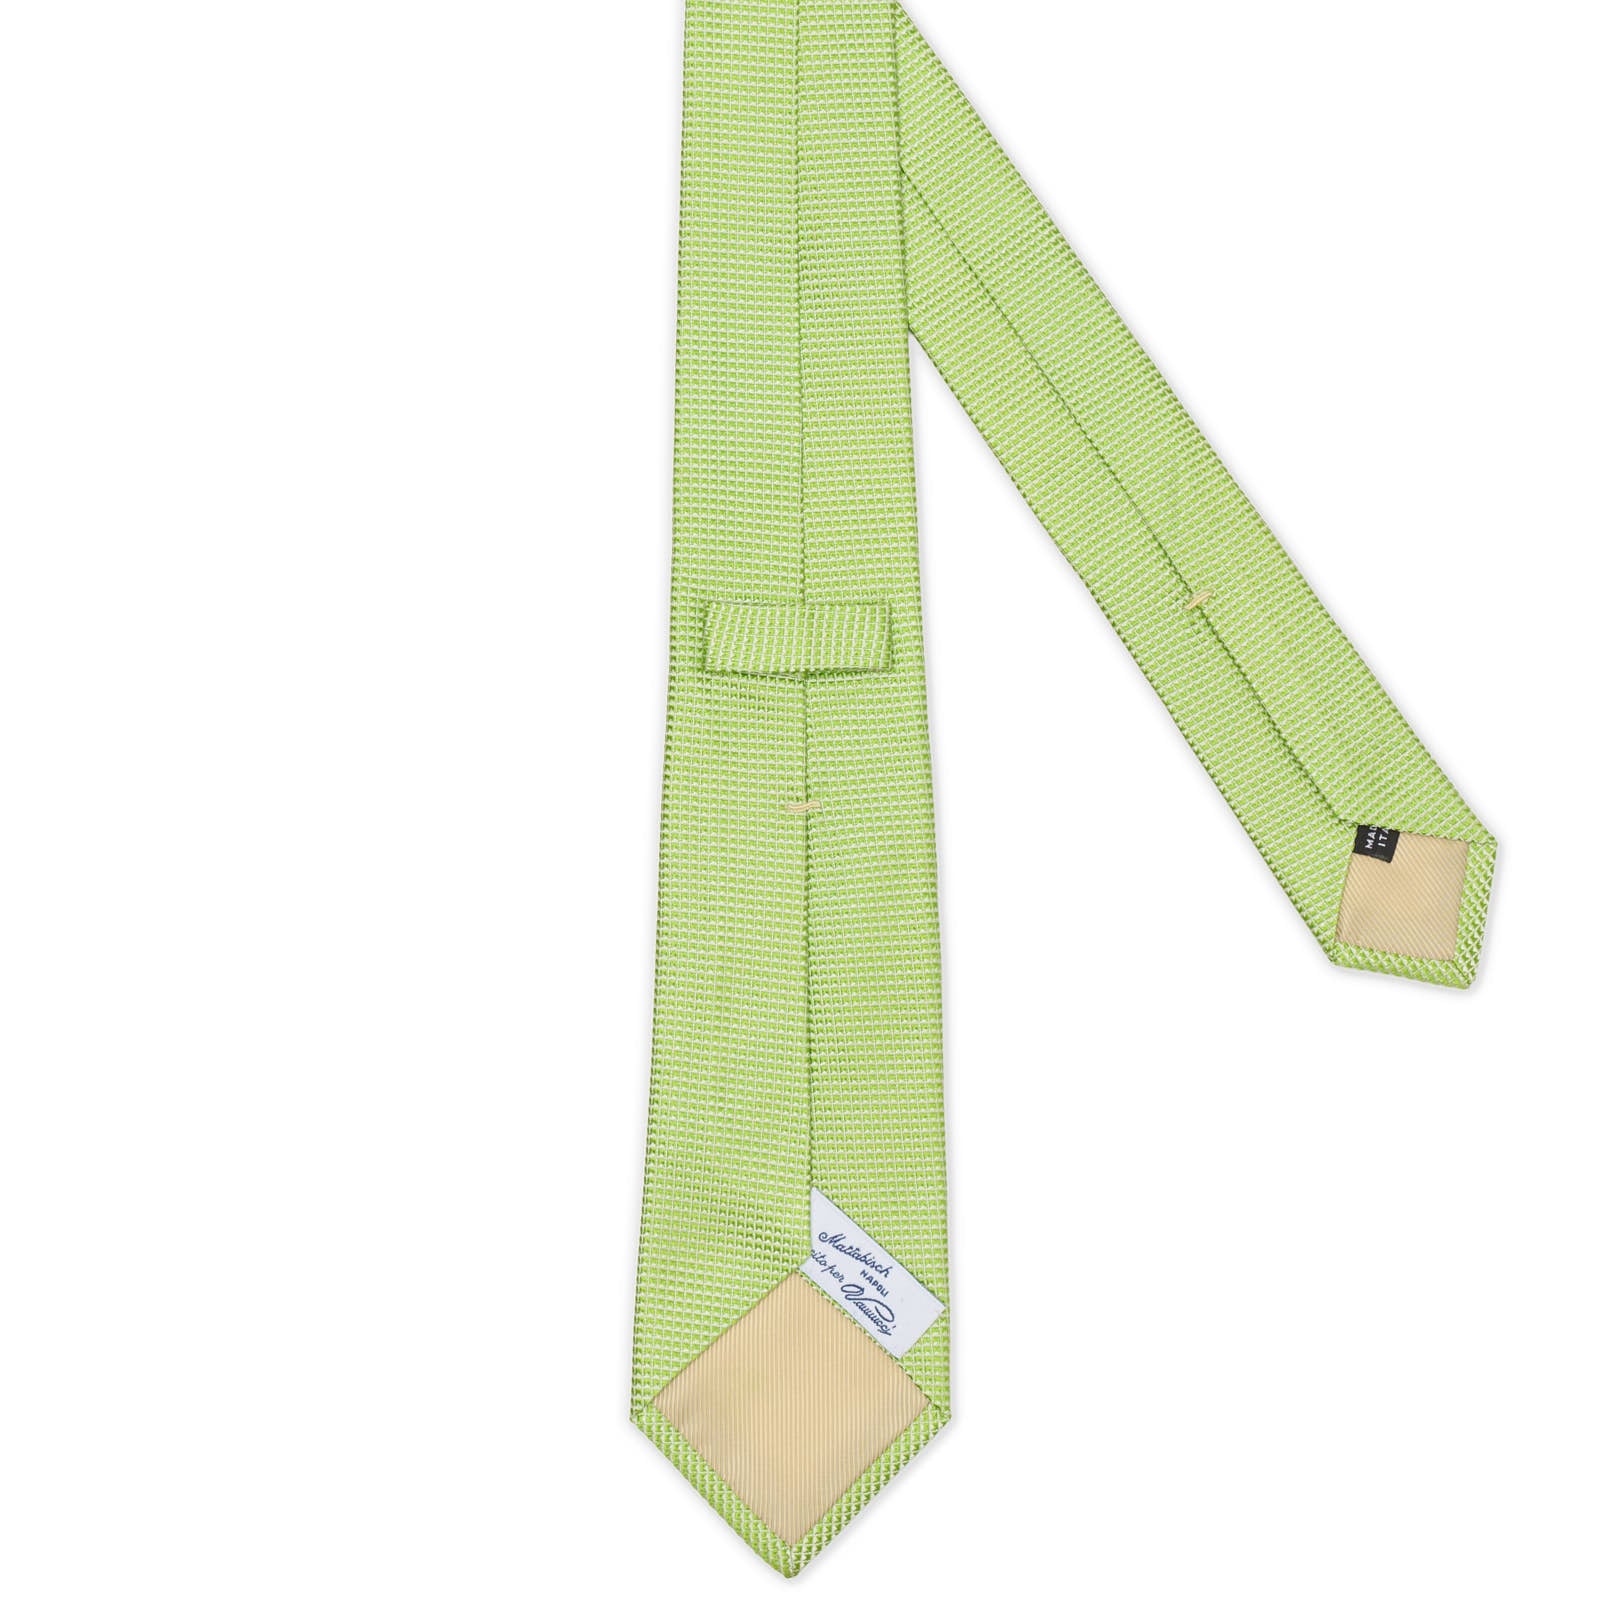 MATTABISCH of for VANNUCCI Light Green Nailhead Silk Tie NEW